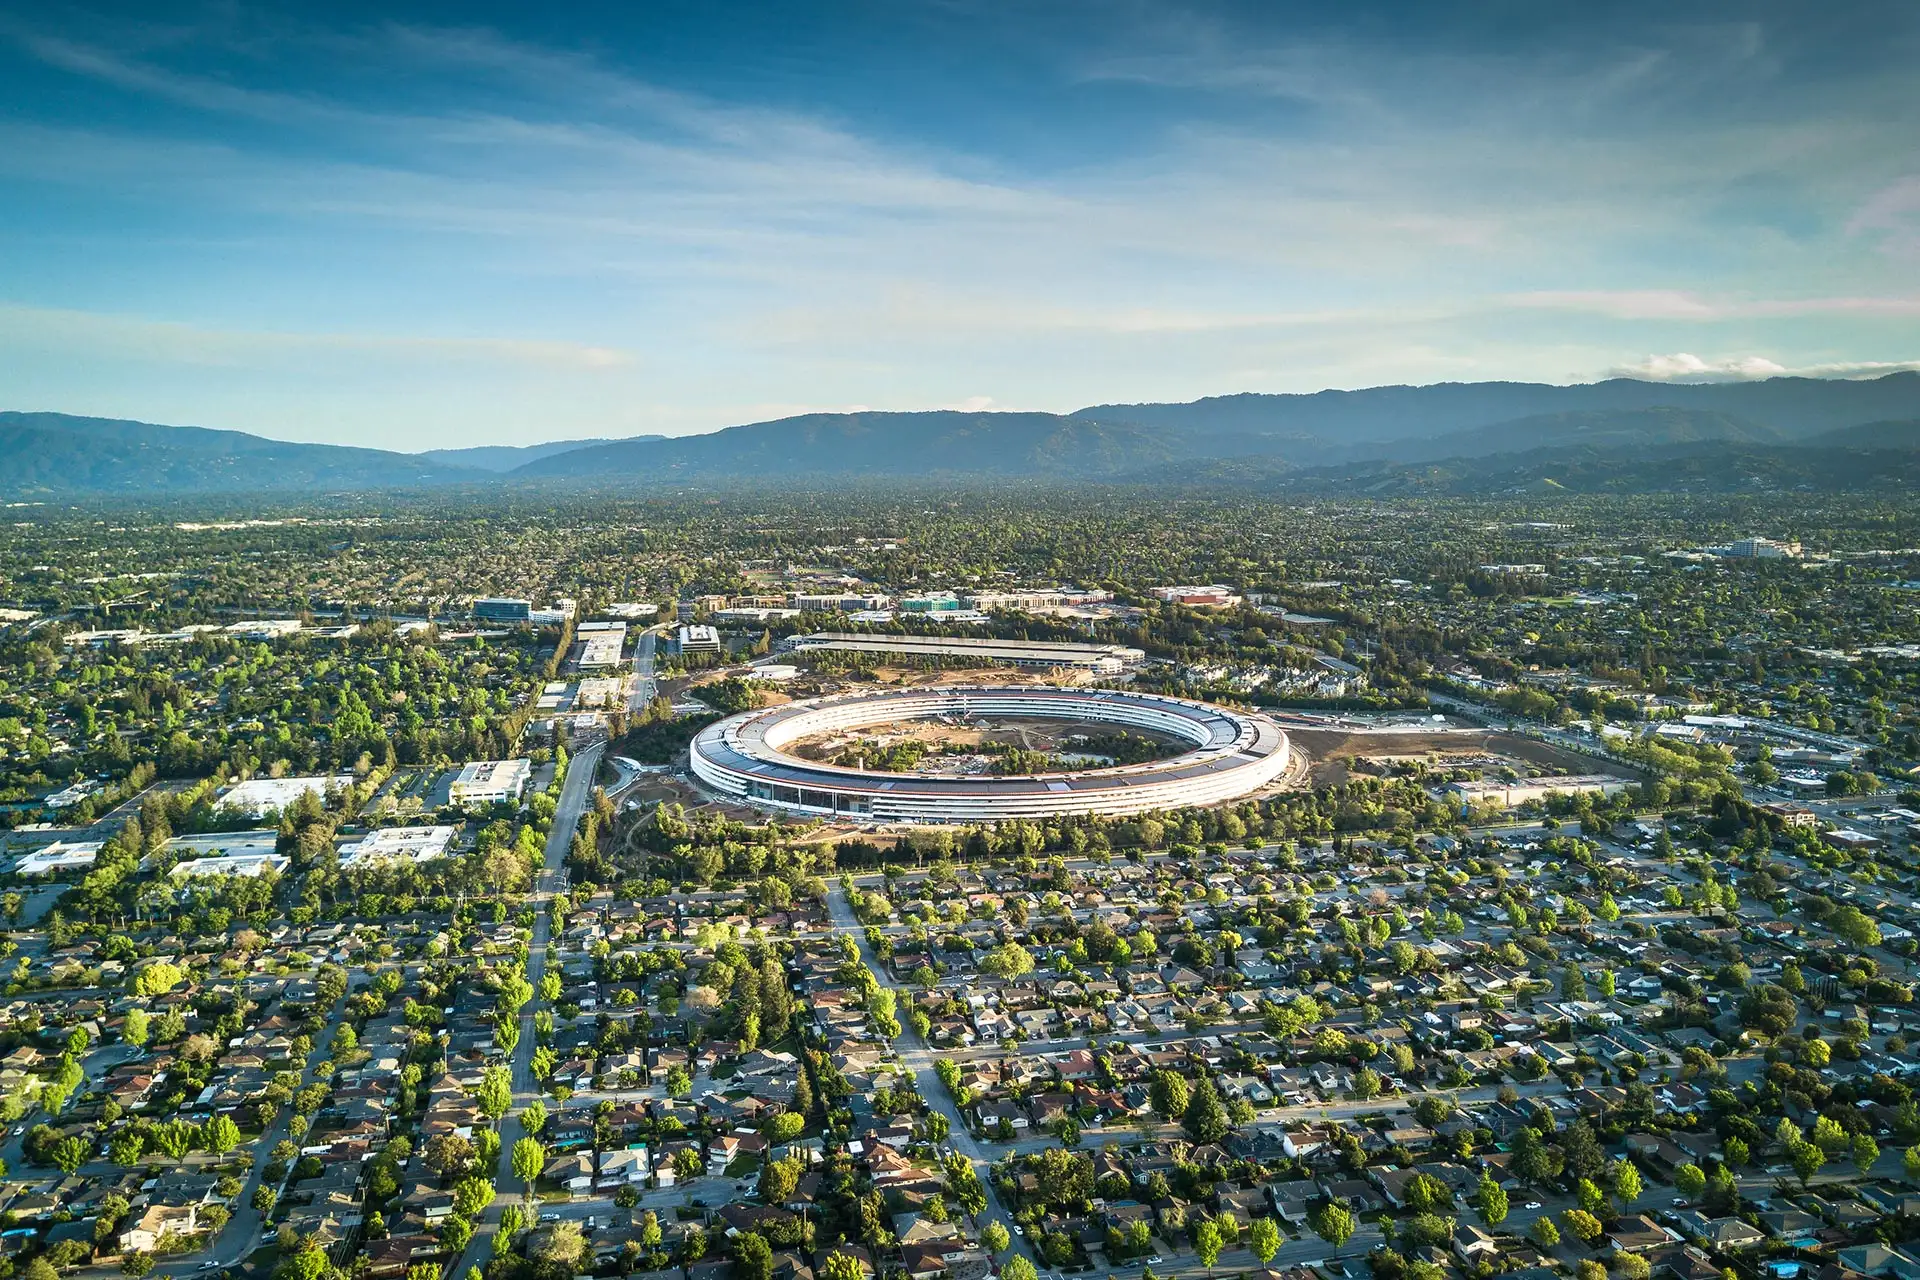 Apple's campus in Cupertino, California